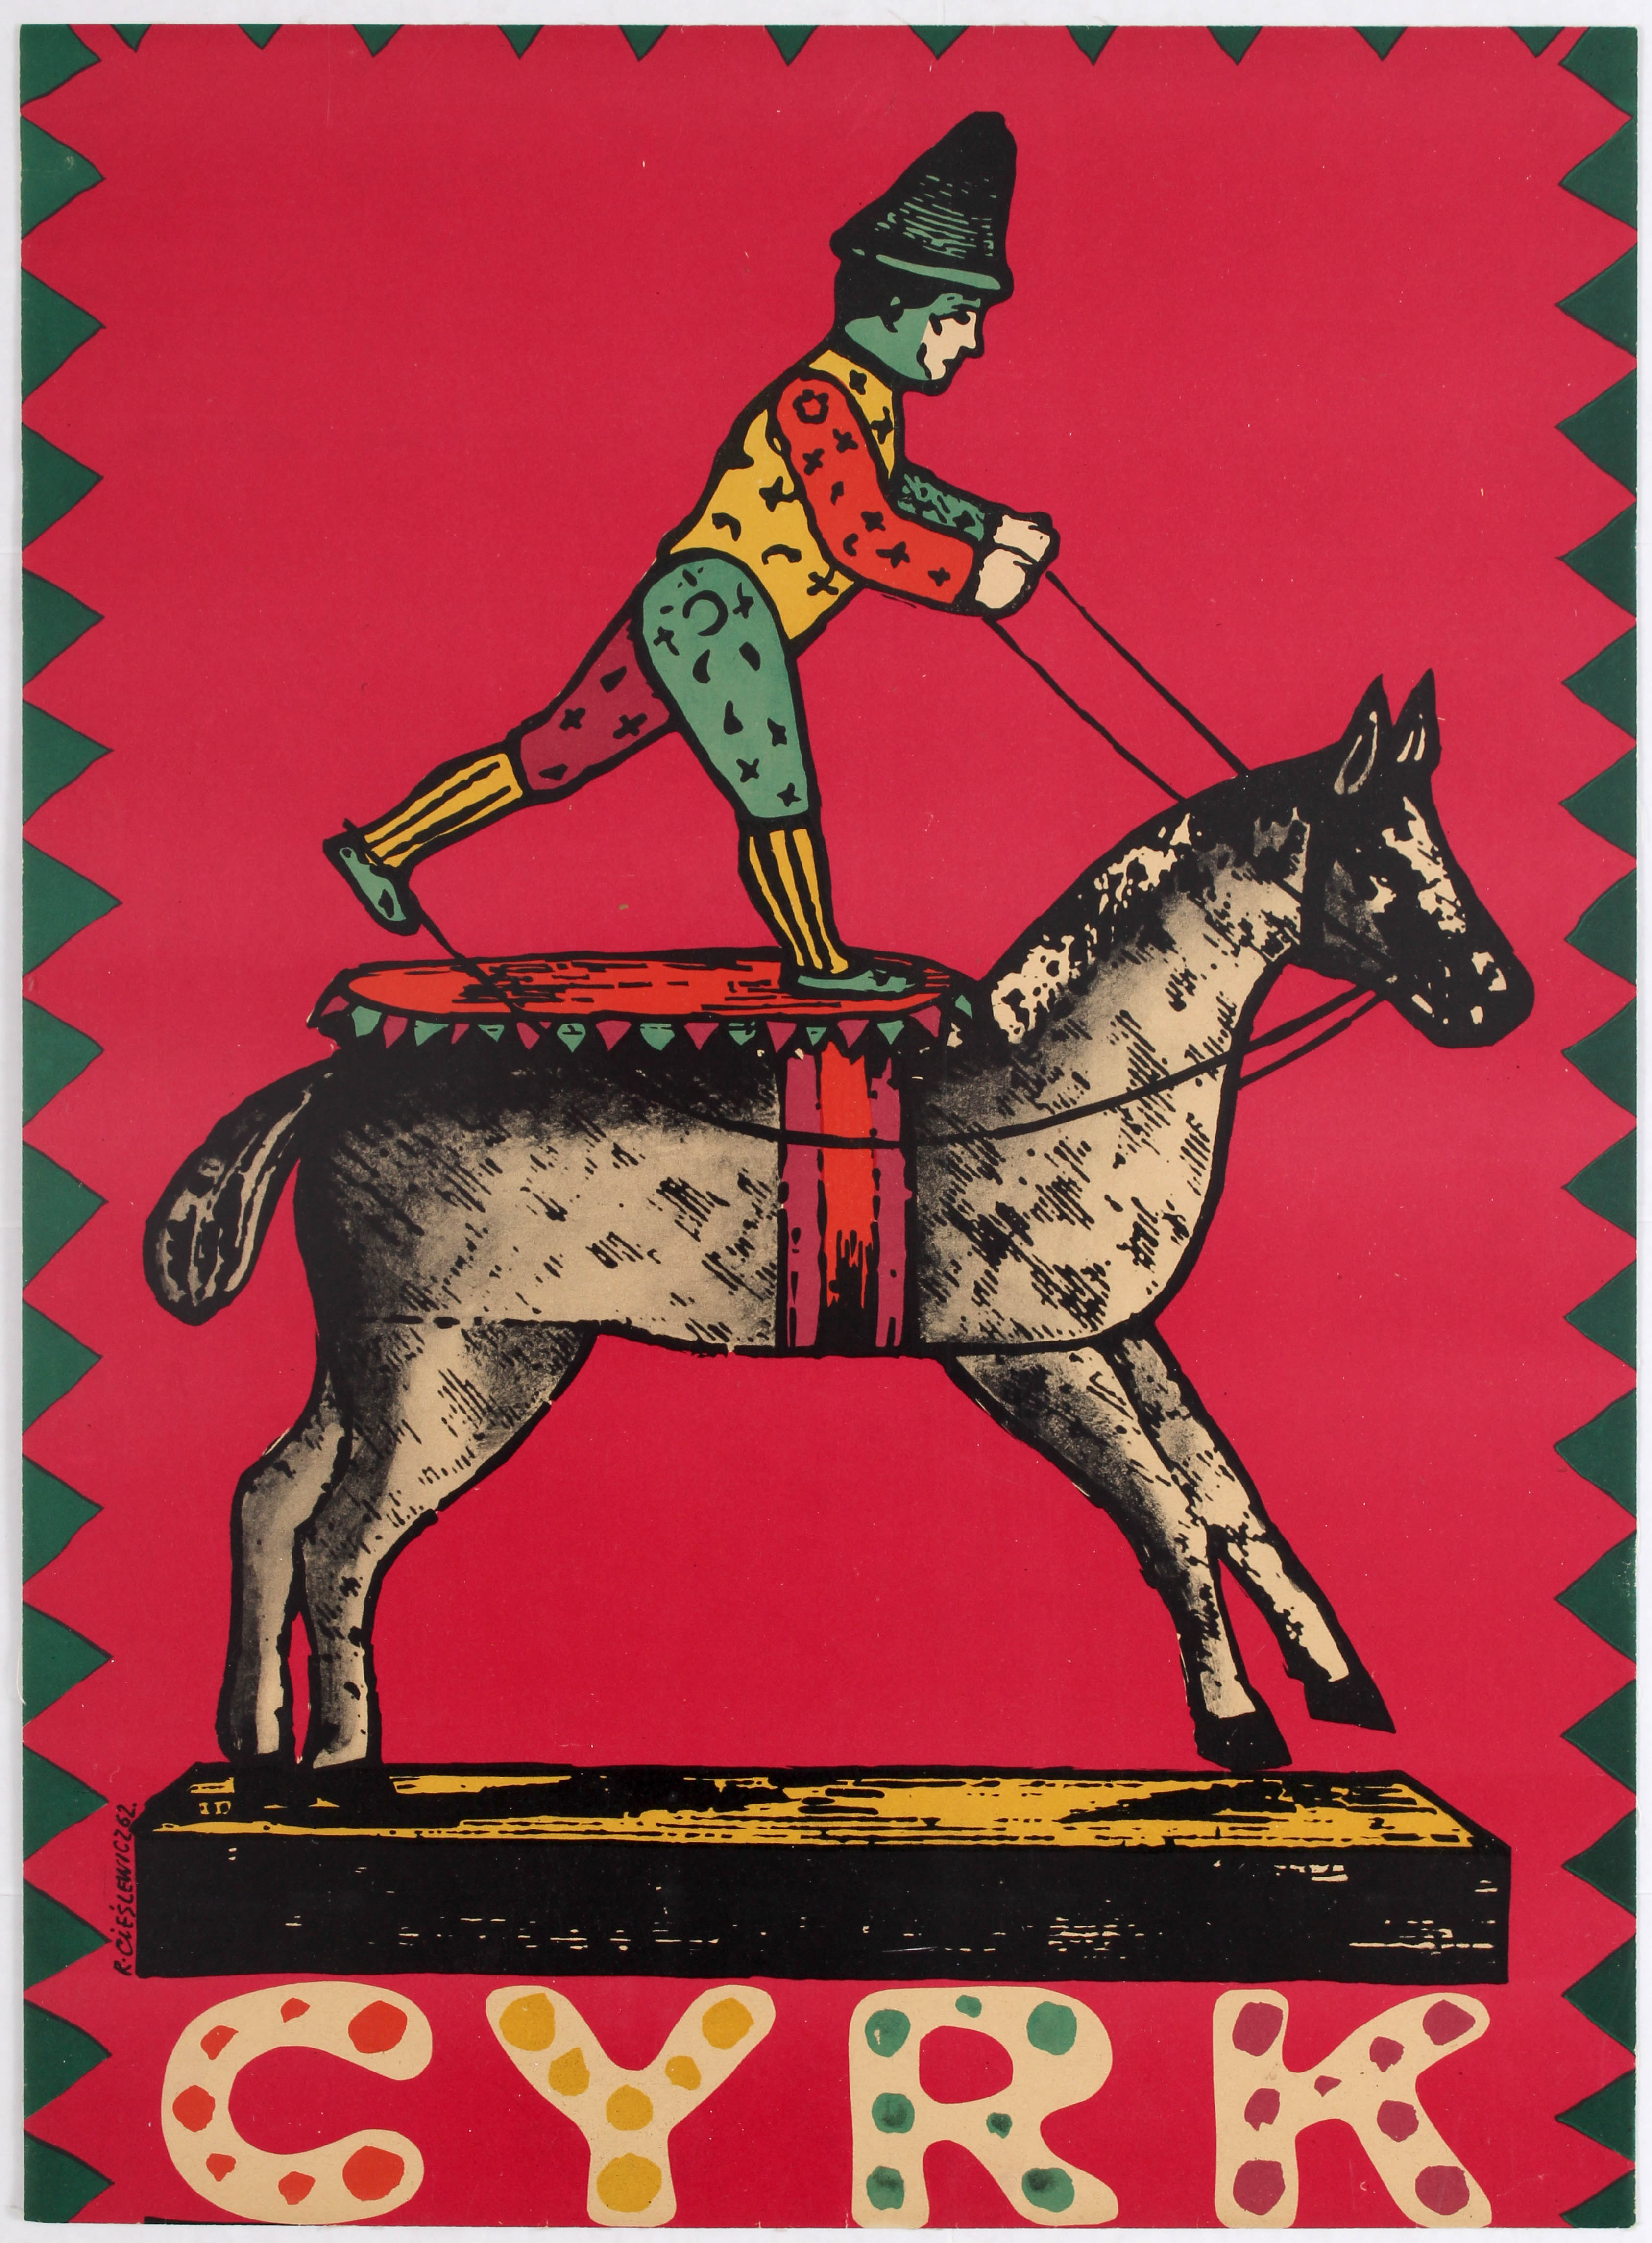 Advertising Polish Circus poster – Cyrk, wooden horse